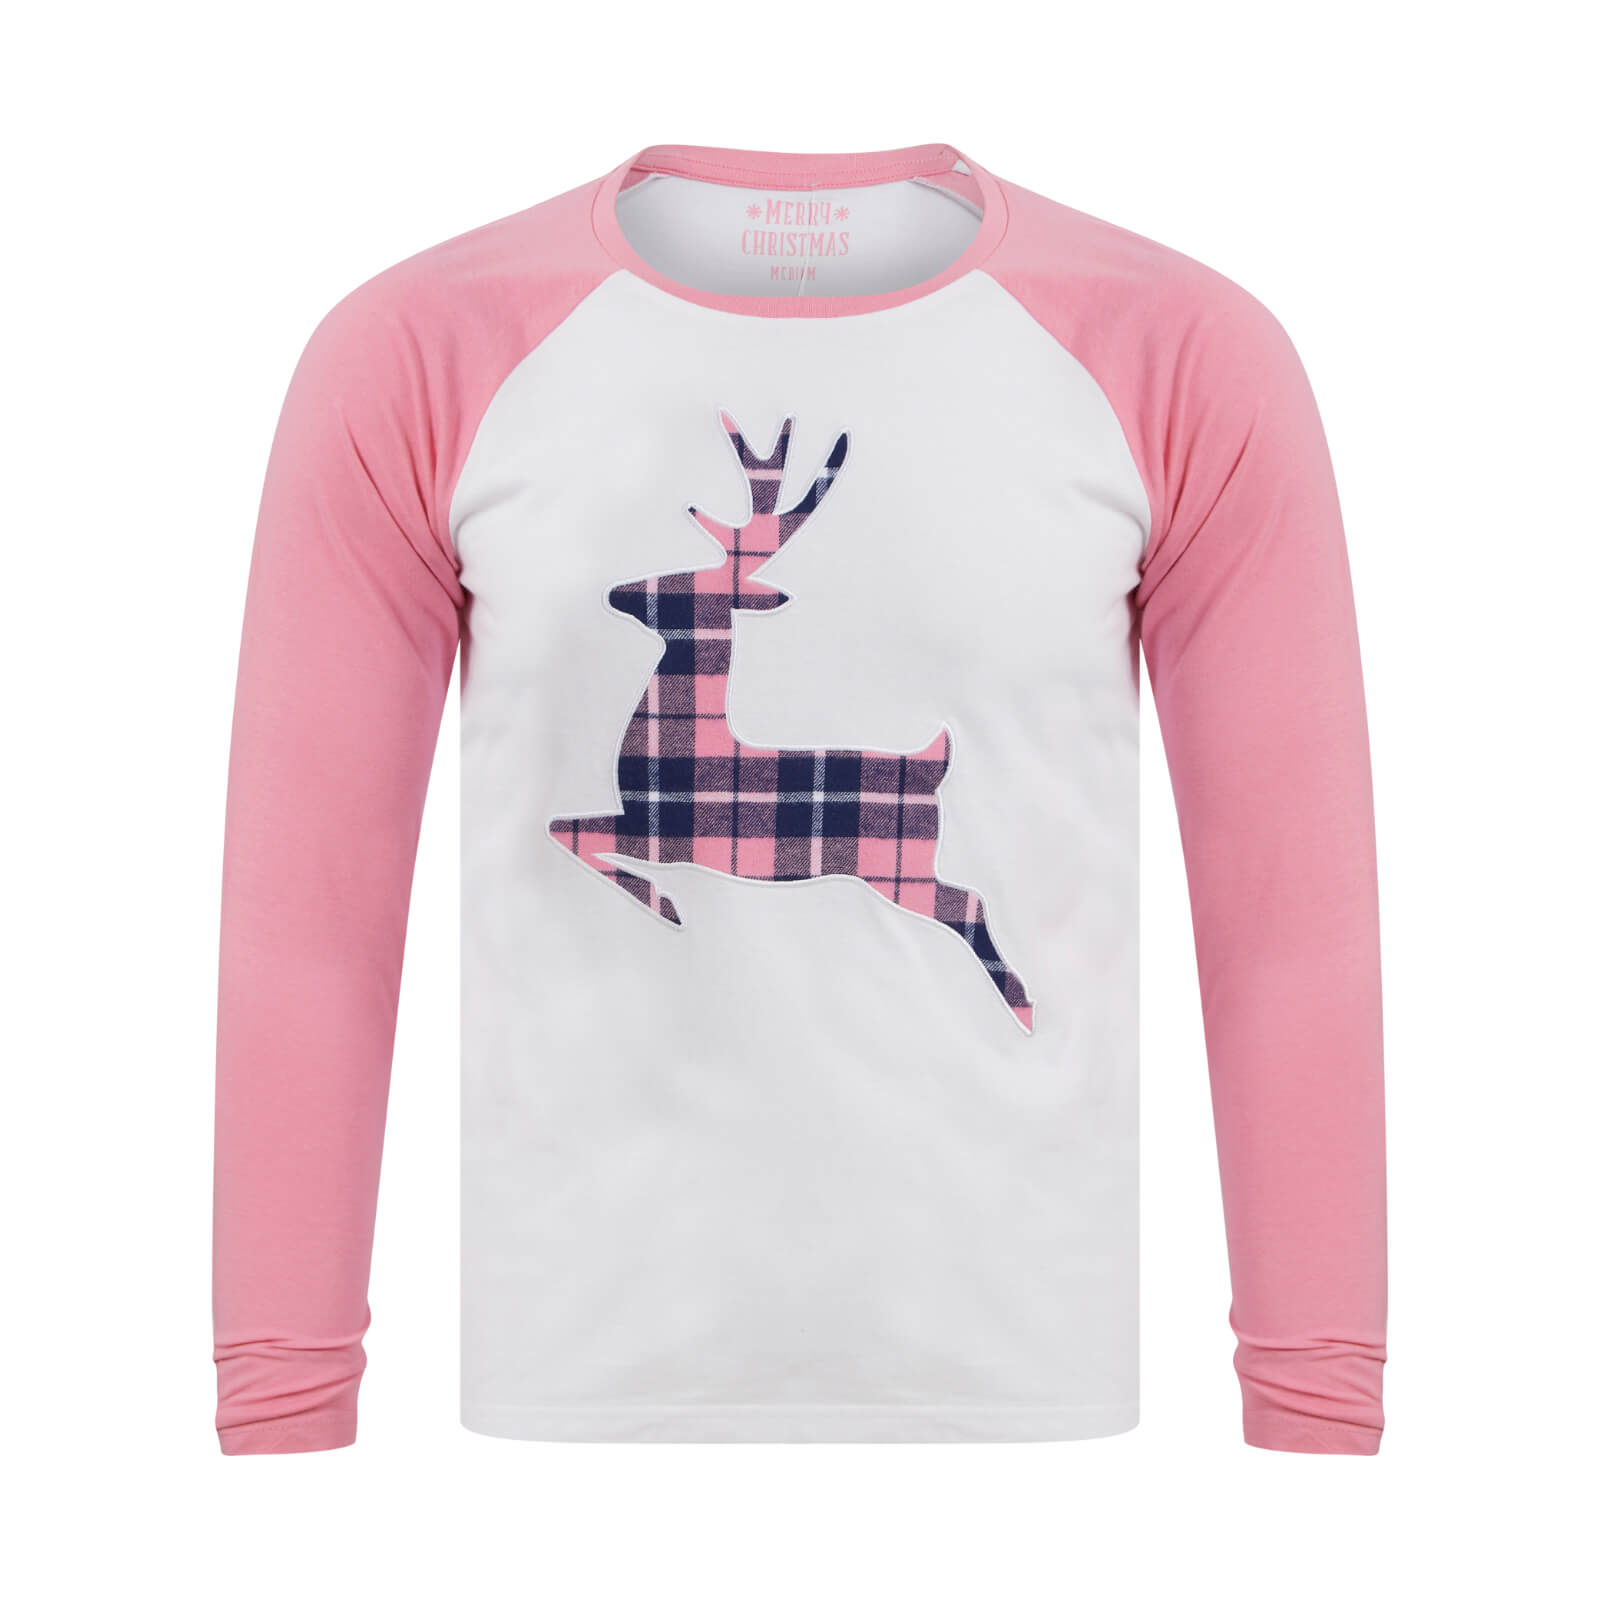 Mr Crimbo Kids Christmas Pyjama Set Stag/Reindeer Pink Red - MrCrimbo.co.uk -SRG4Q17465_F - Pink/Navy -11-13